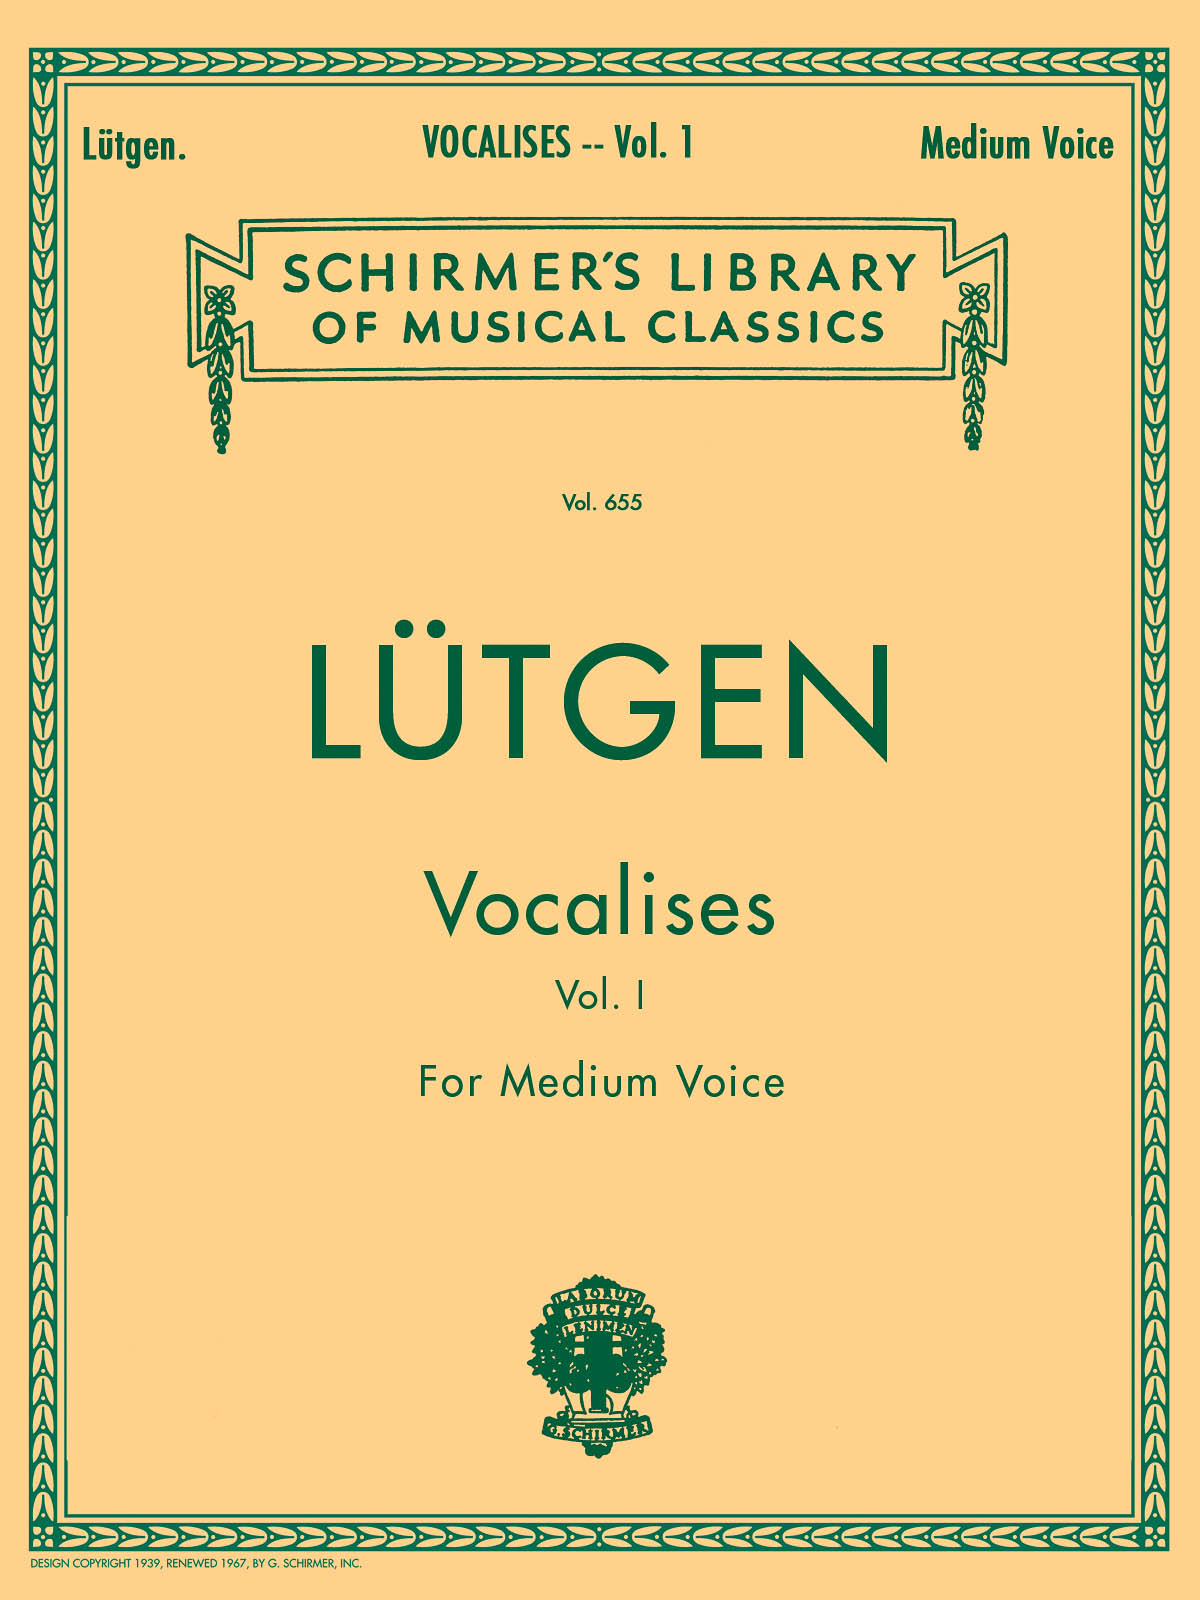 B. Lütgen: Vocalises (20 Daily Exercises) - Book I: Medium Voice: Instrumental